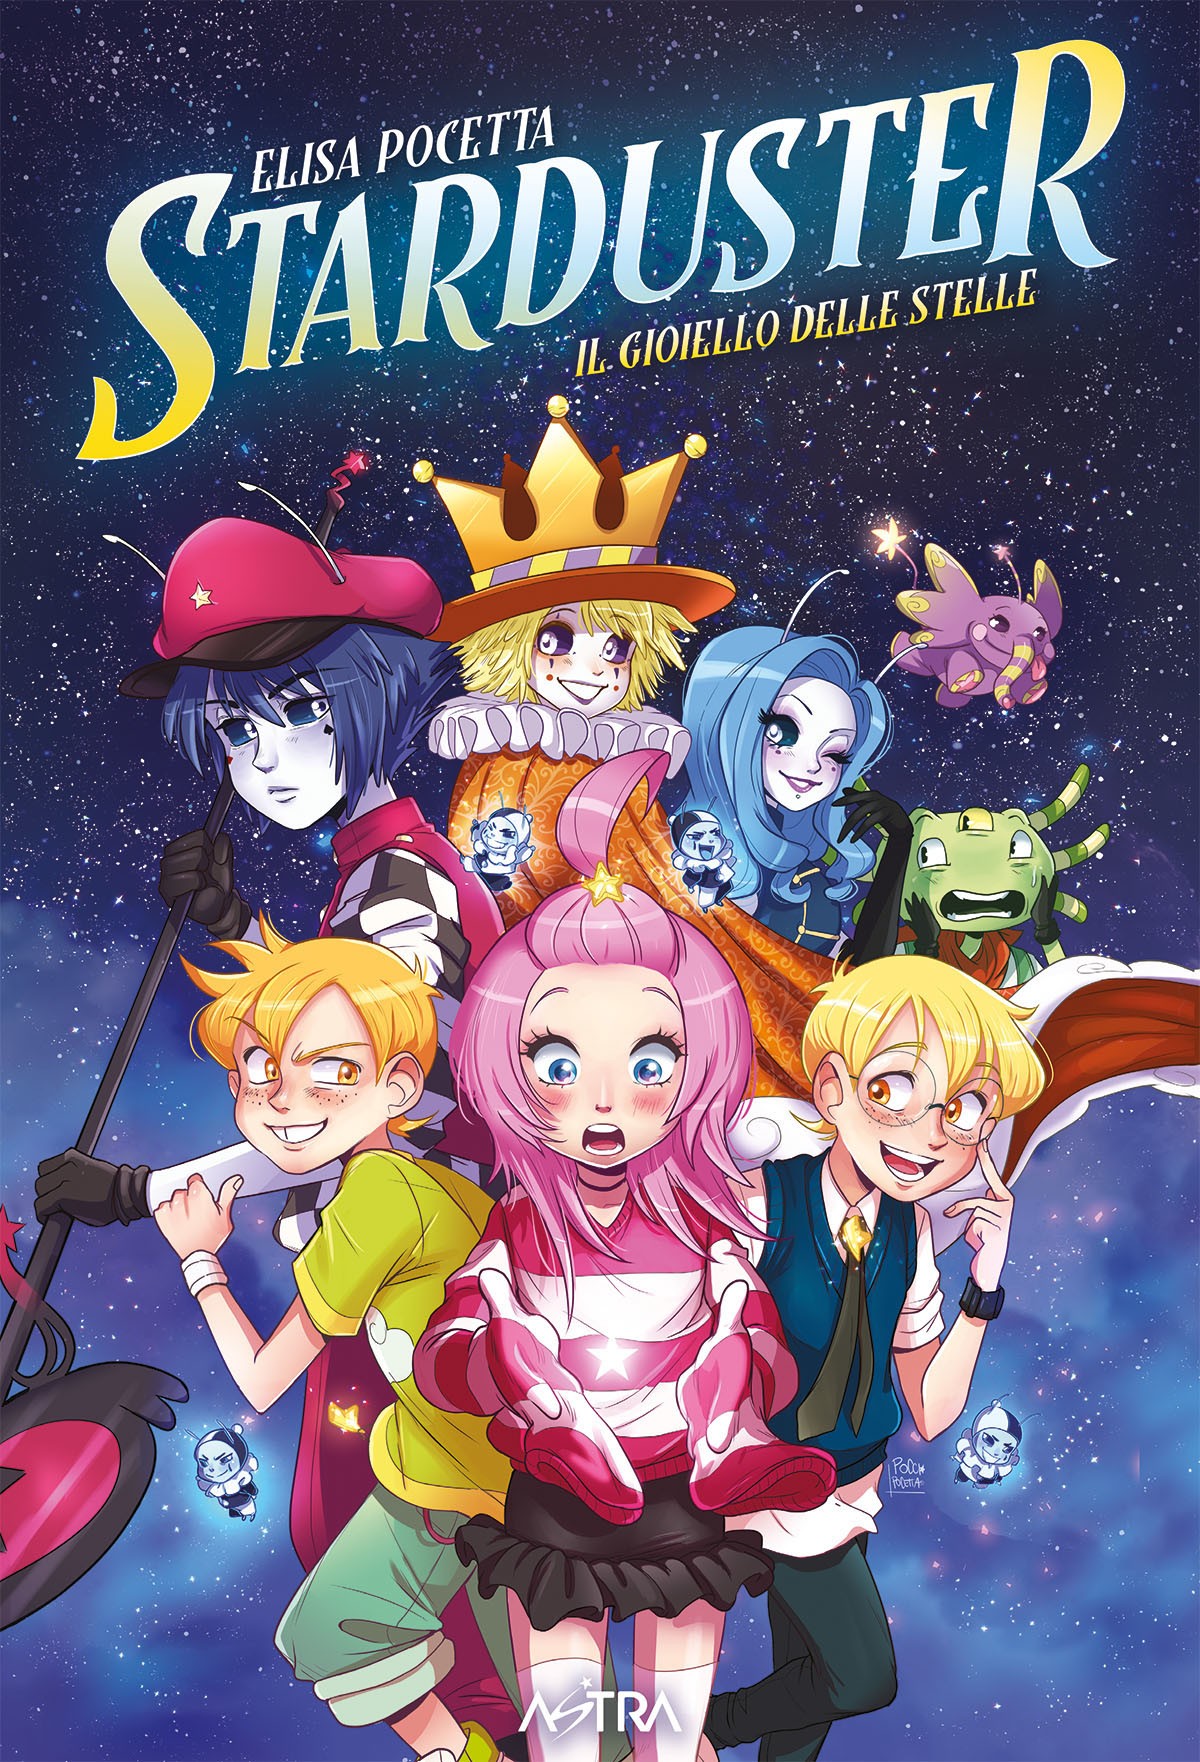 Starduster di Elisa Pocetta (Star Comics, nov. 2022)